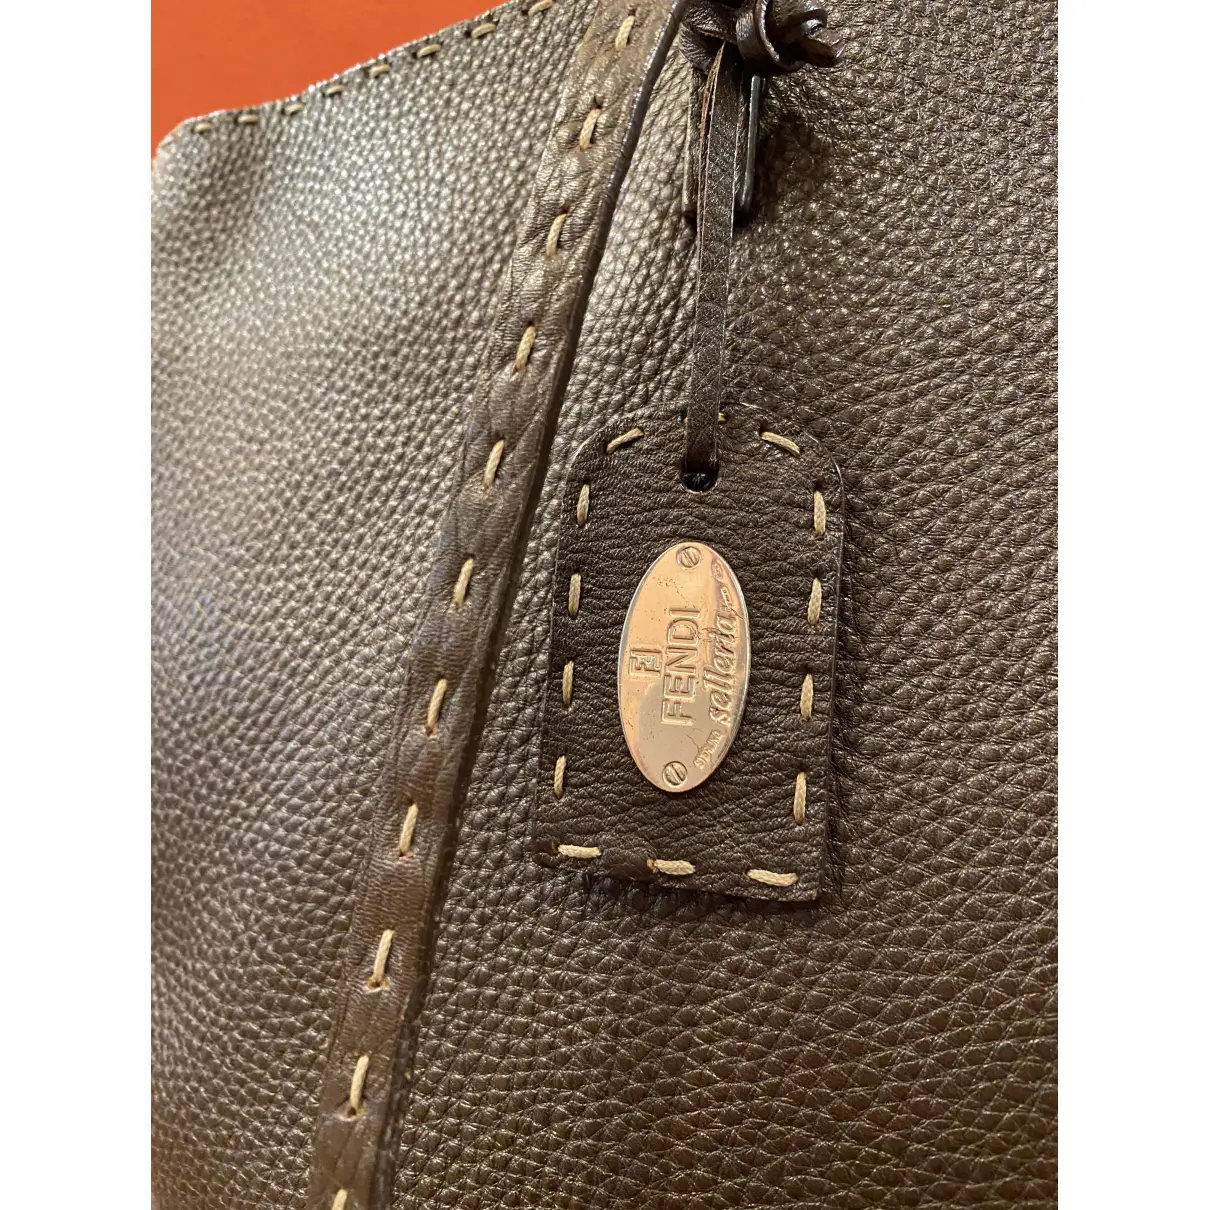 Buy Fendi Carla Selleria leather tote online